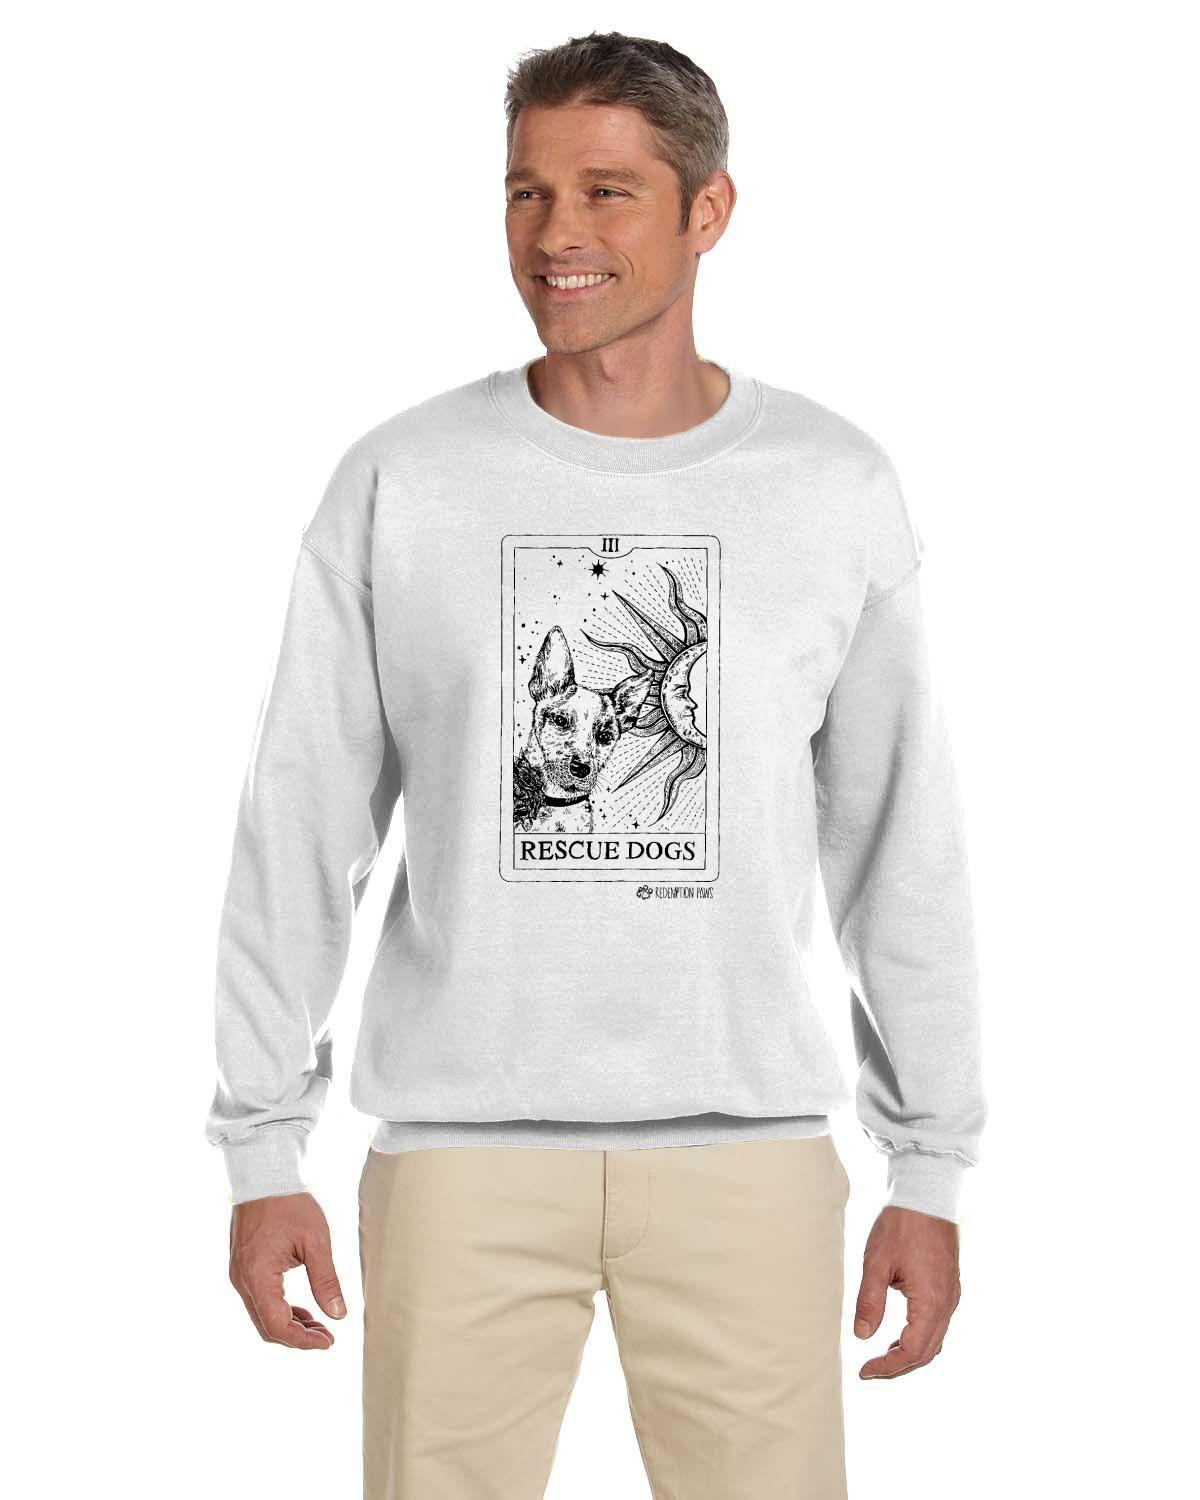 Rescue Dogs Tarot Sweatshirt